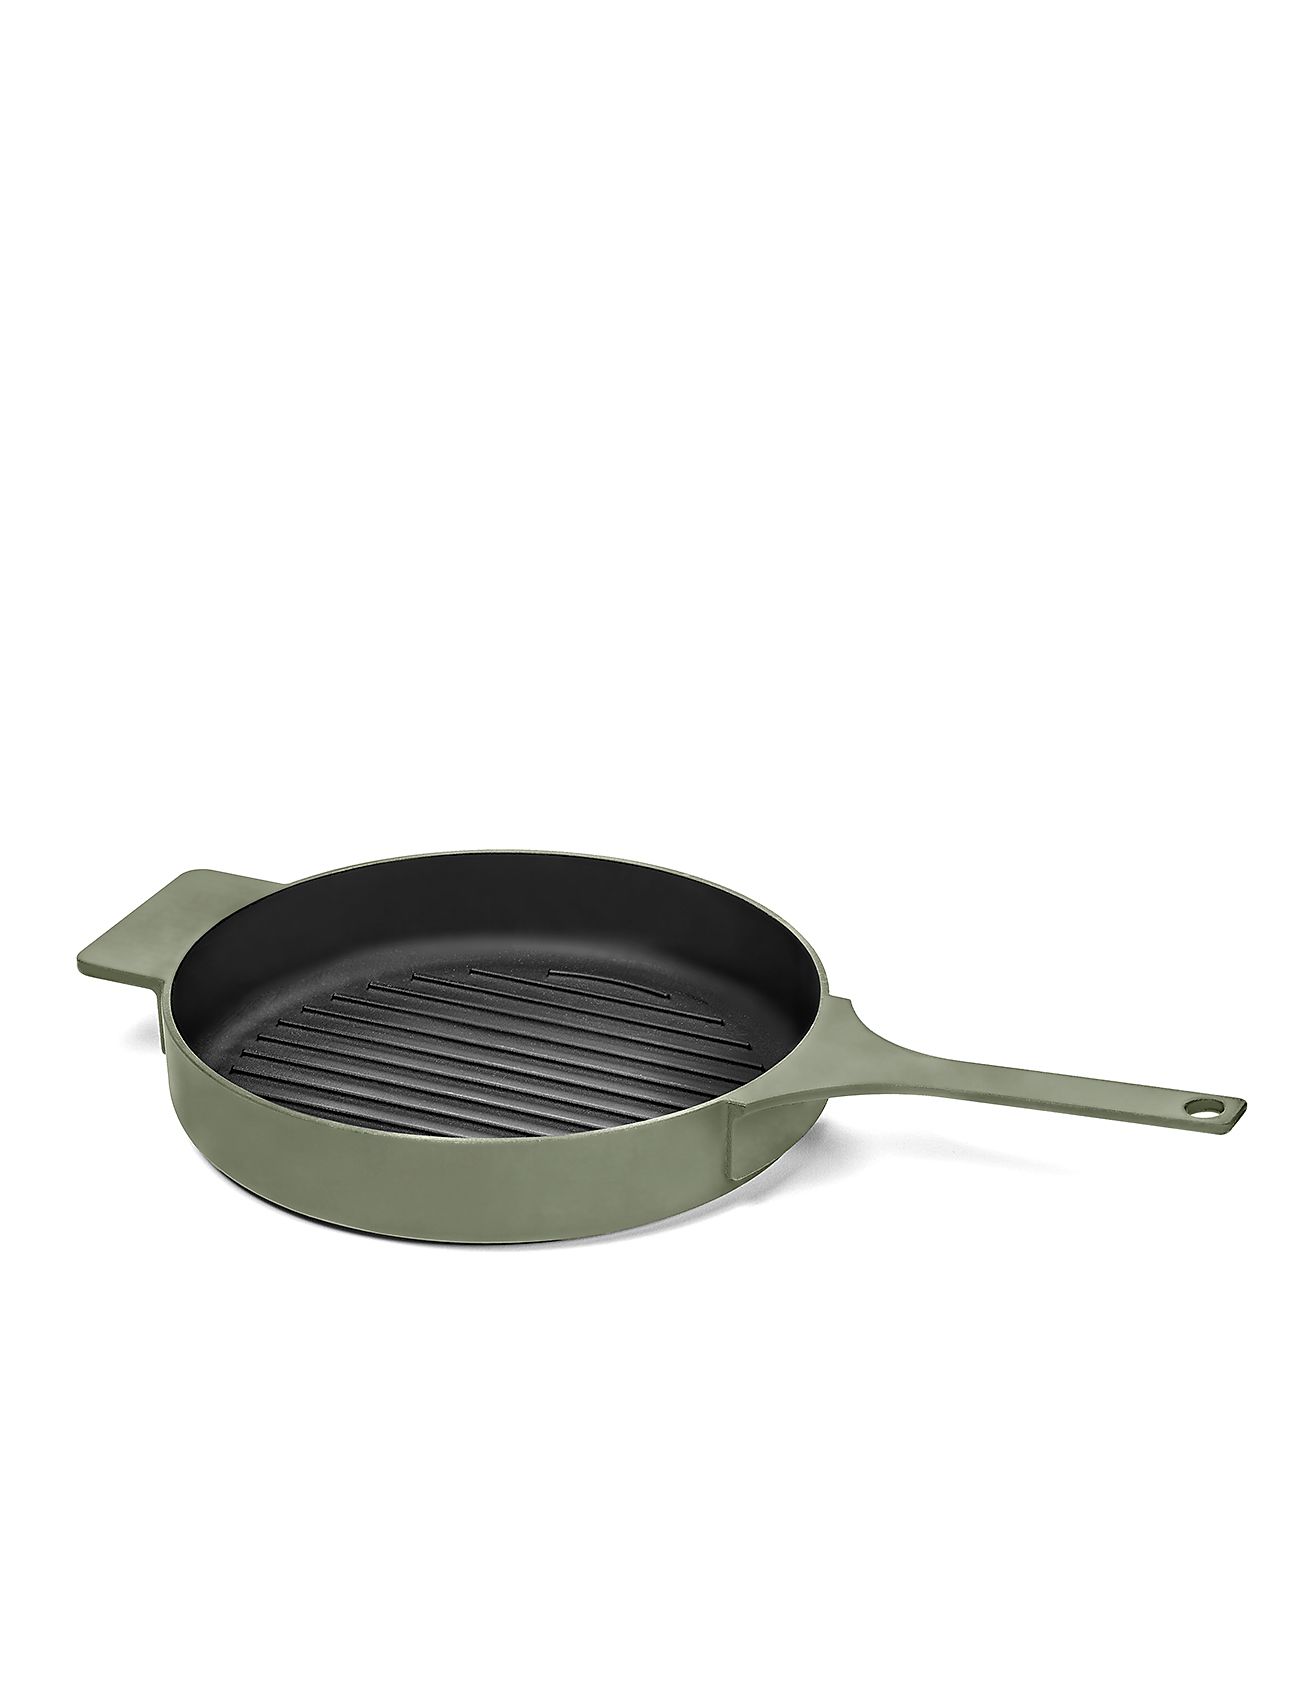 Grillpan Enamel Cast Iron Surface By Sergio Herman Home Kitchen Pots & Pans Frying Pans Green Serax